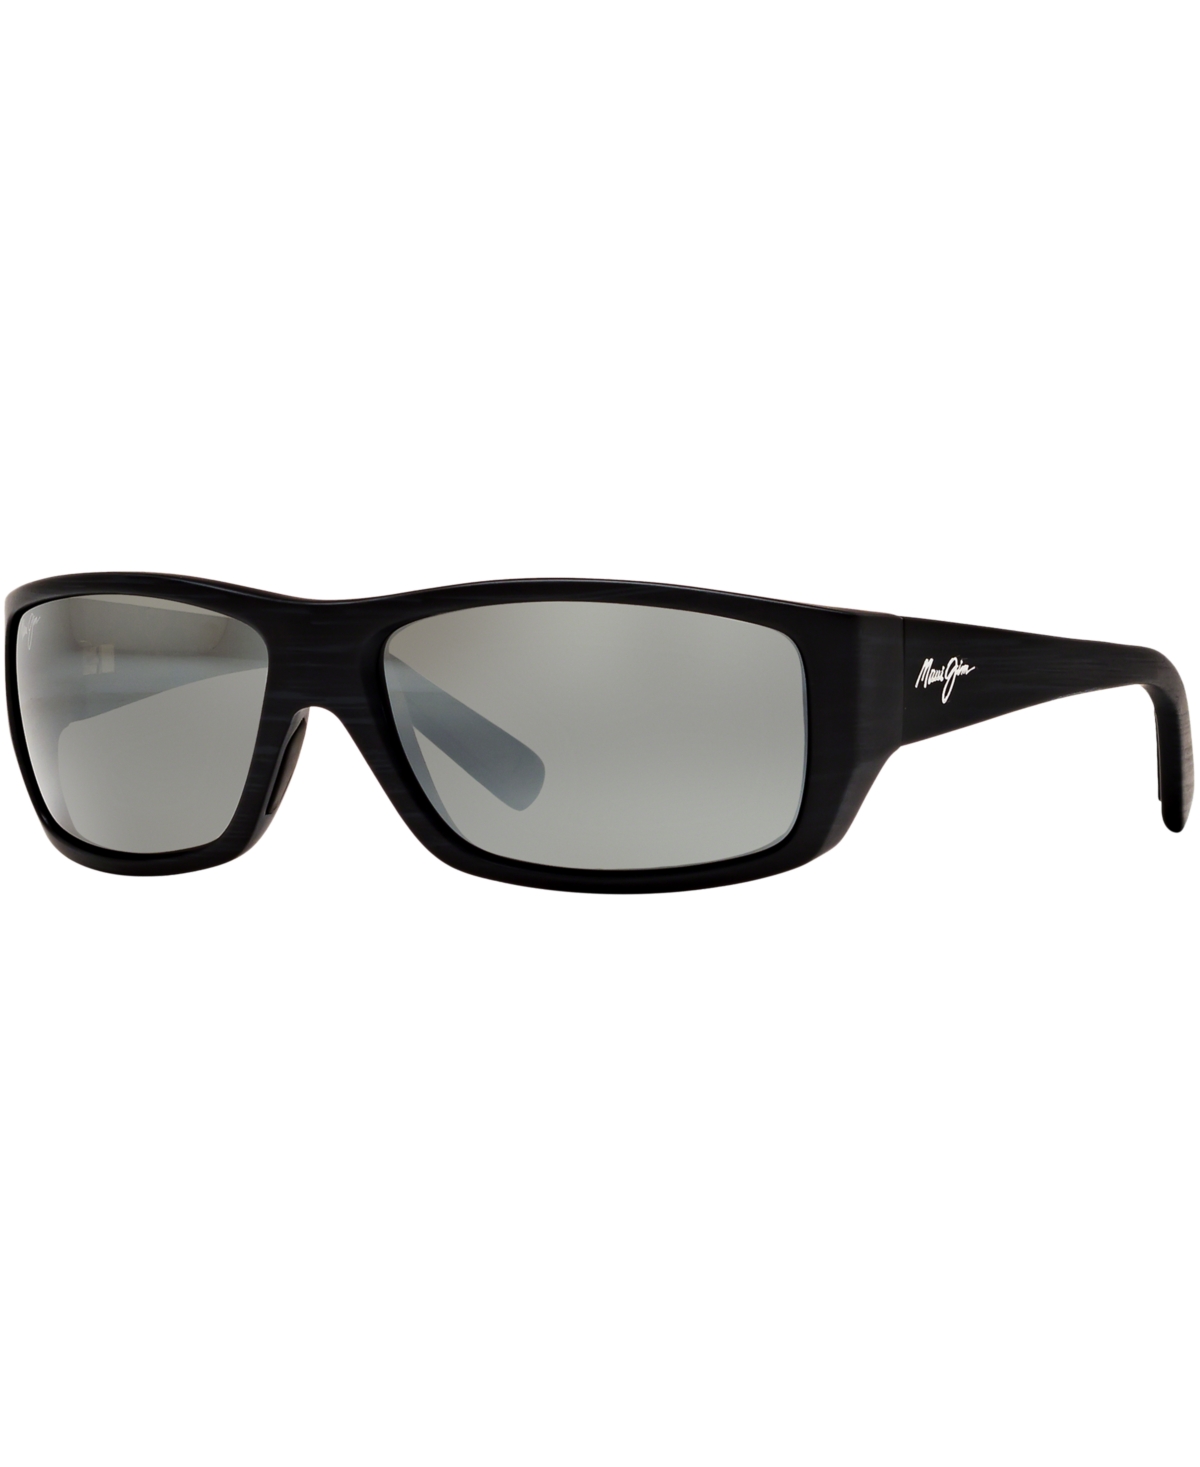 Polarized Wassup Sunglasses, 123 61 - BLACK/GREY MIR POL